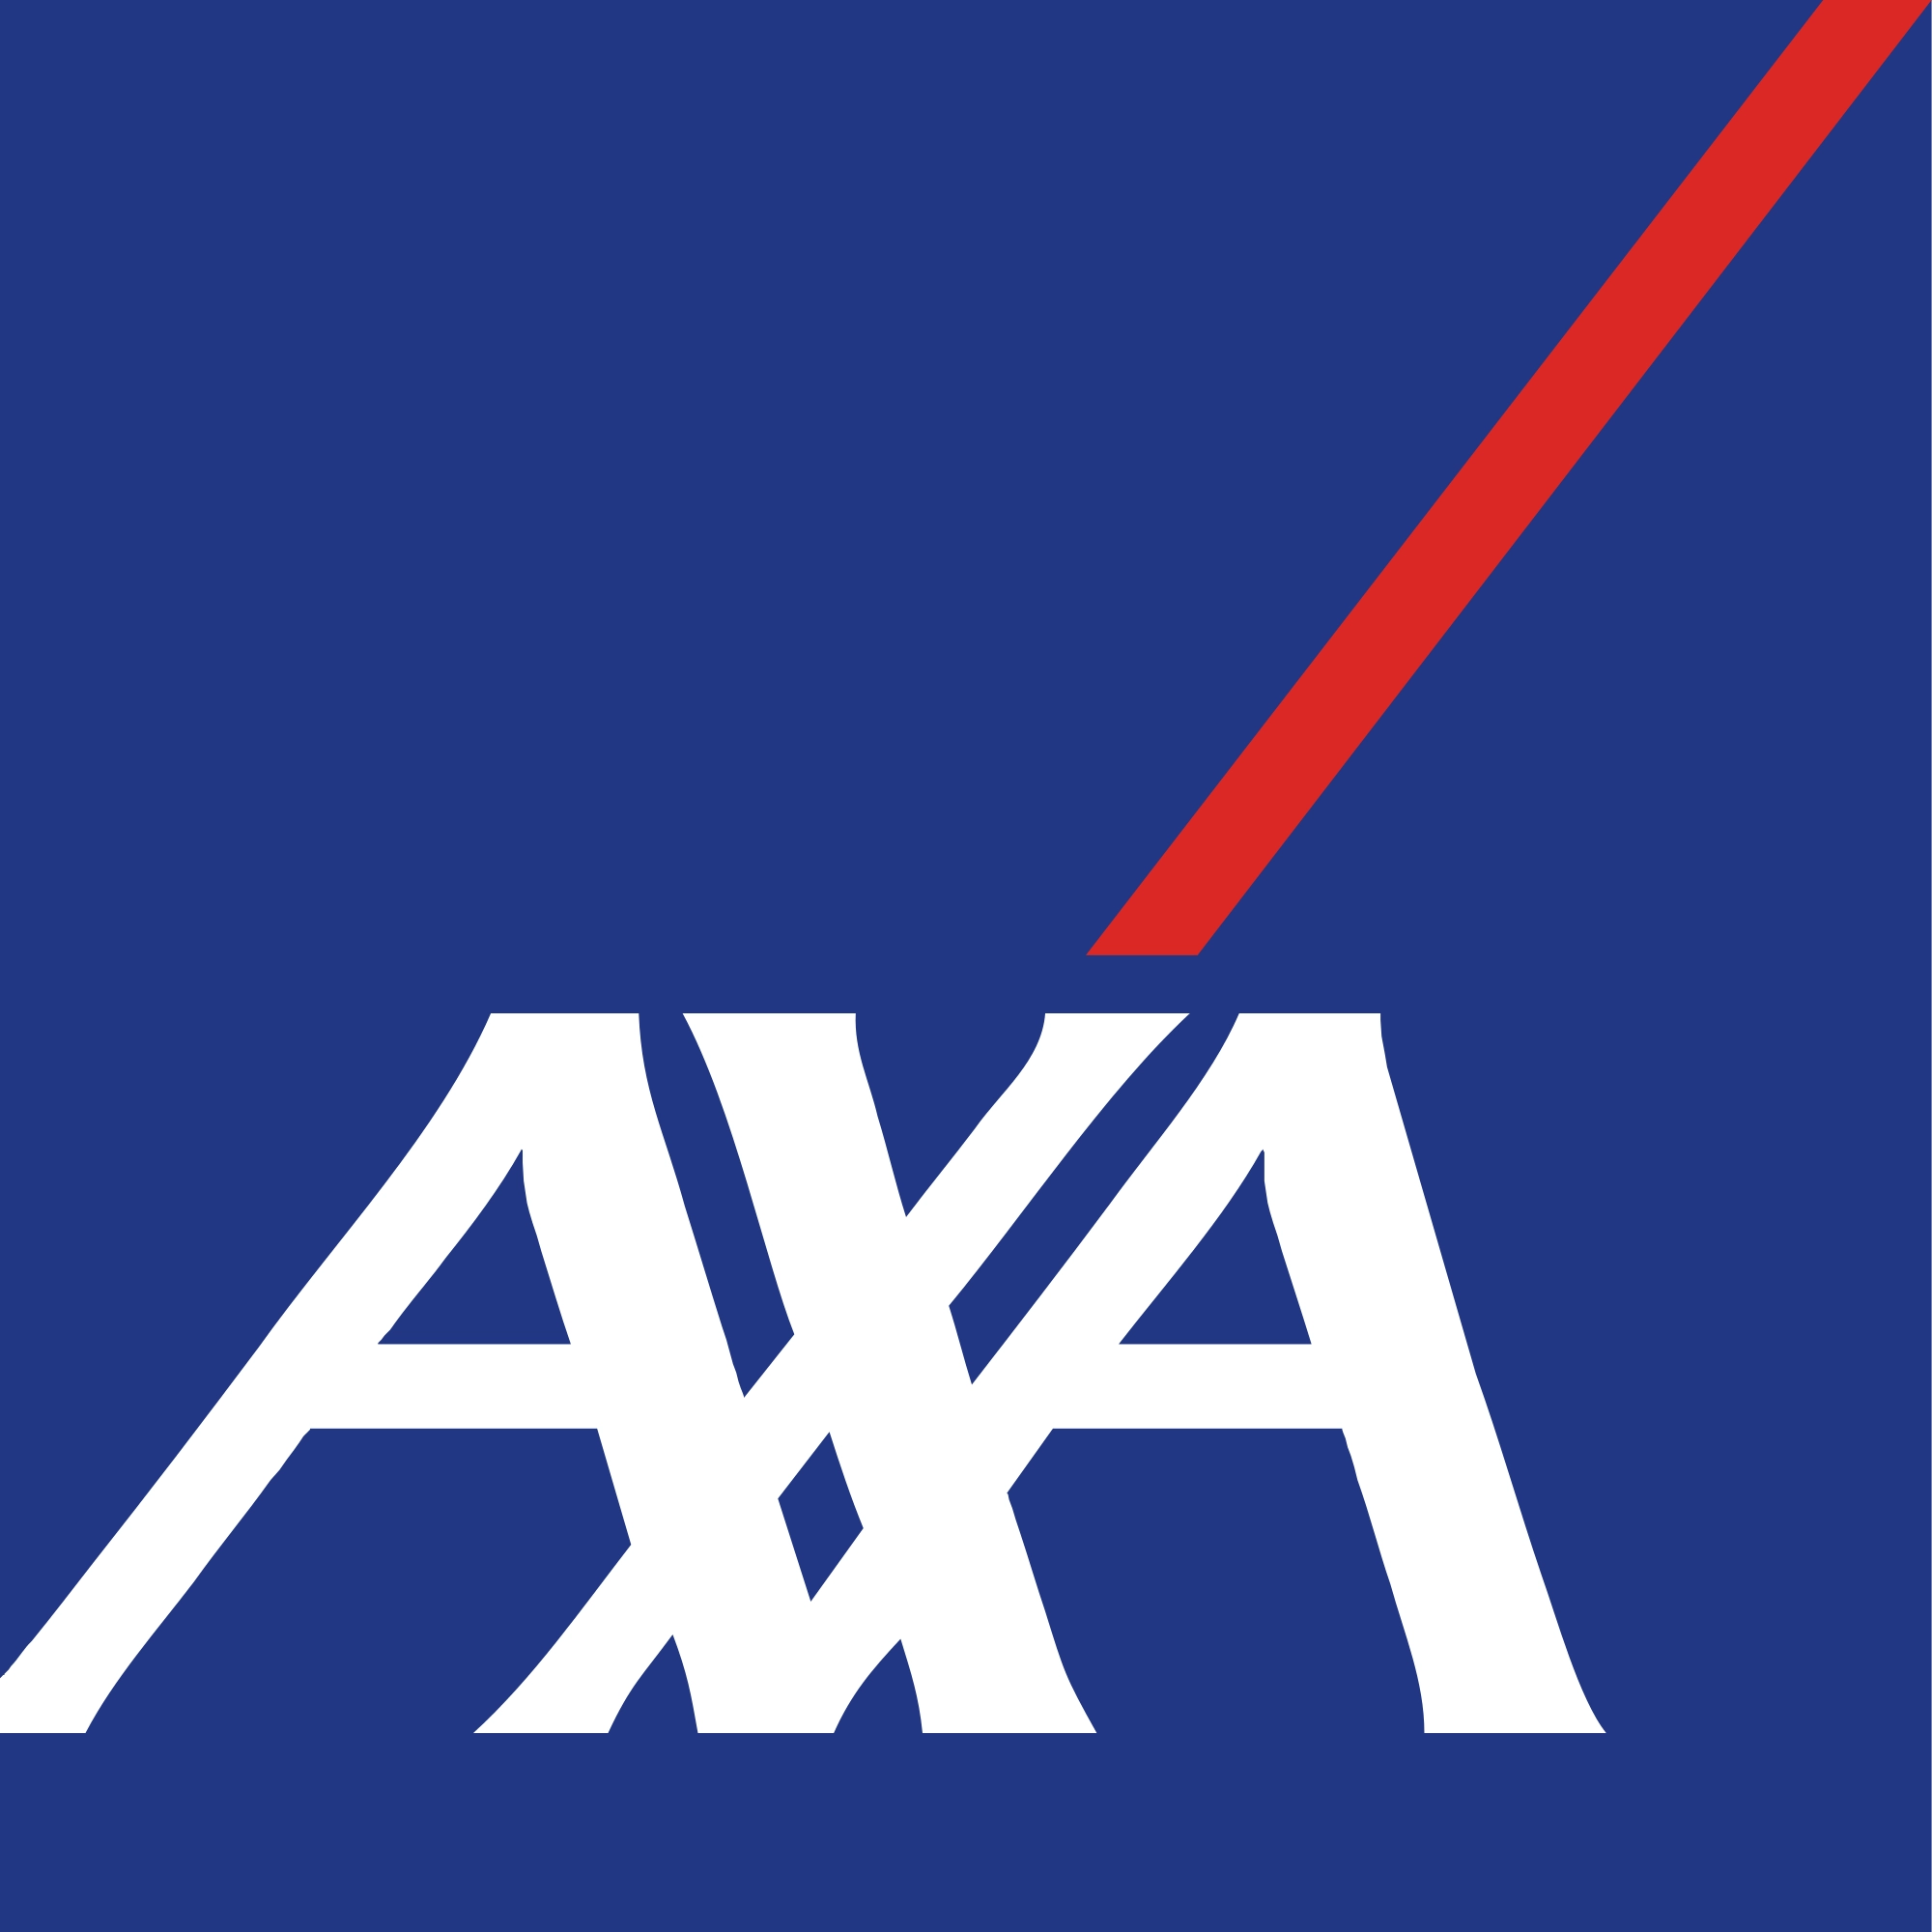 Axa životní pojišťovna a s sfcr 2017